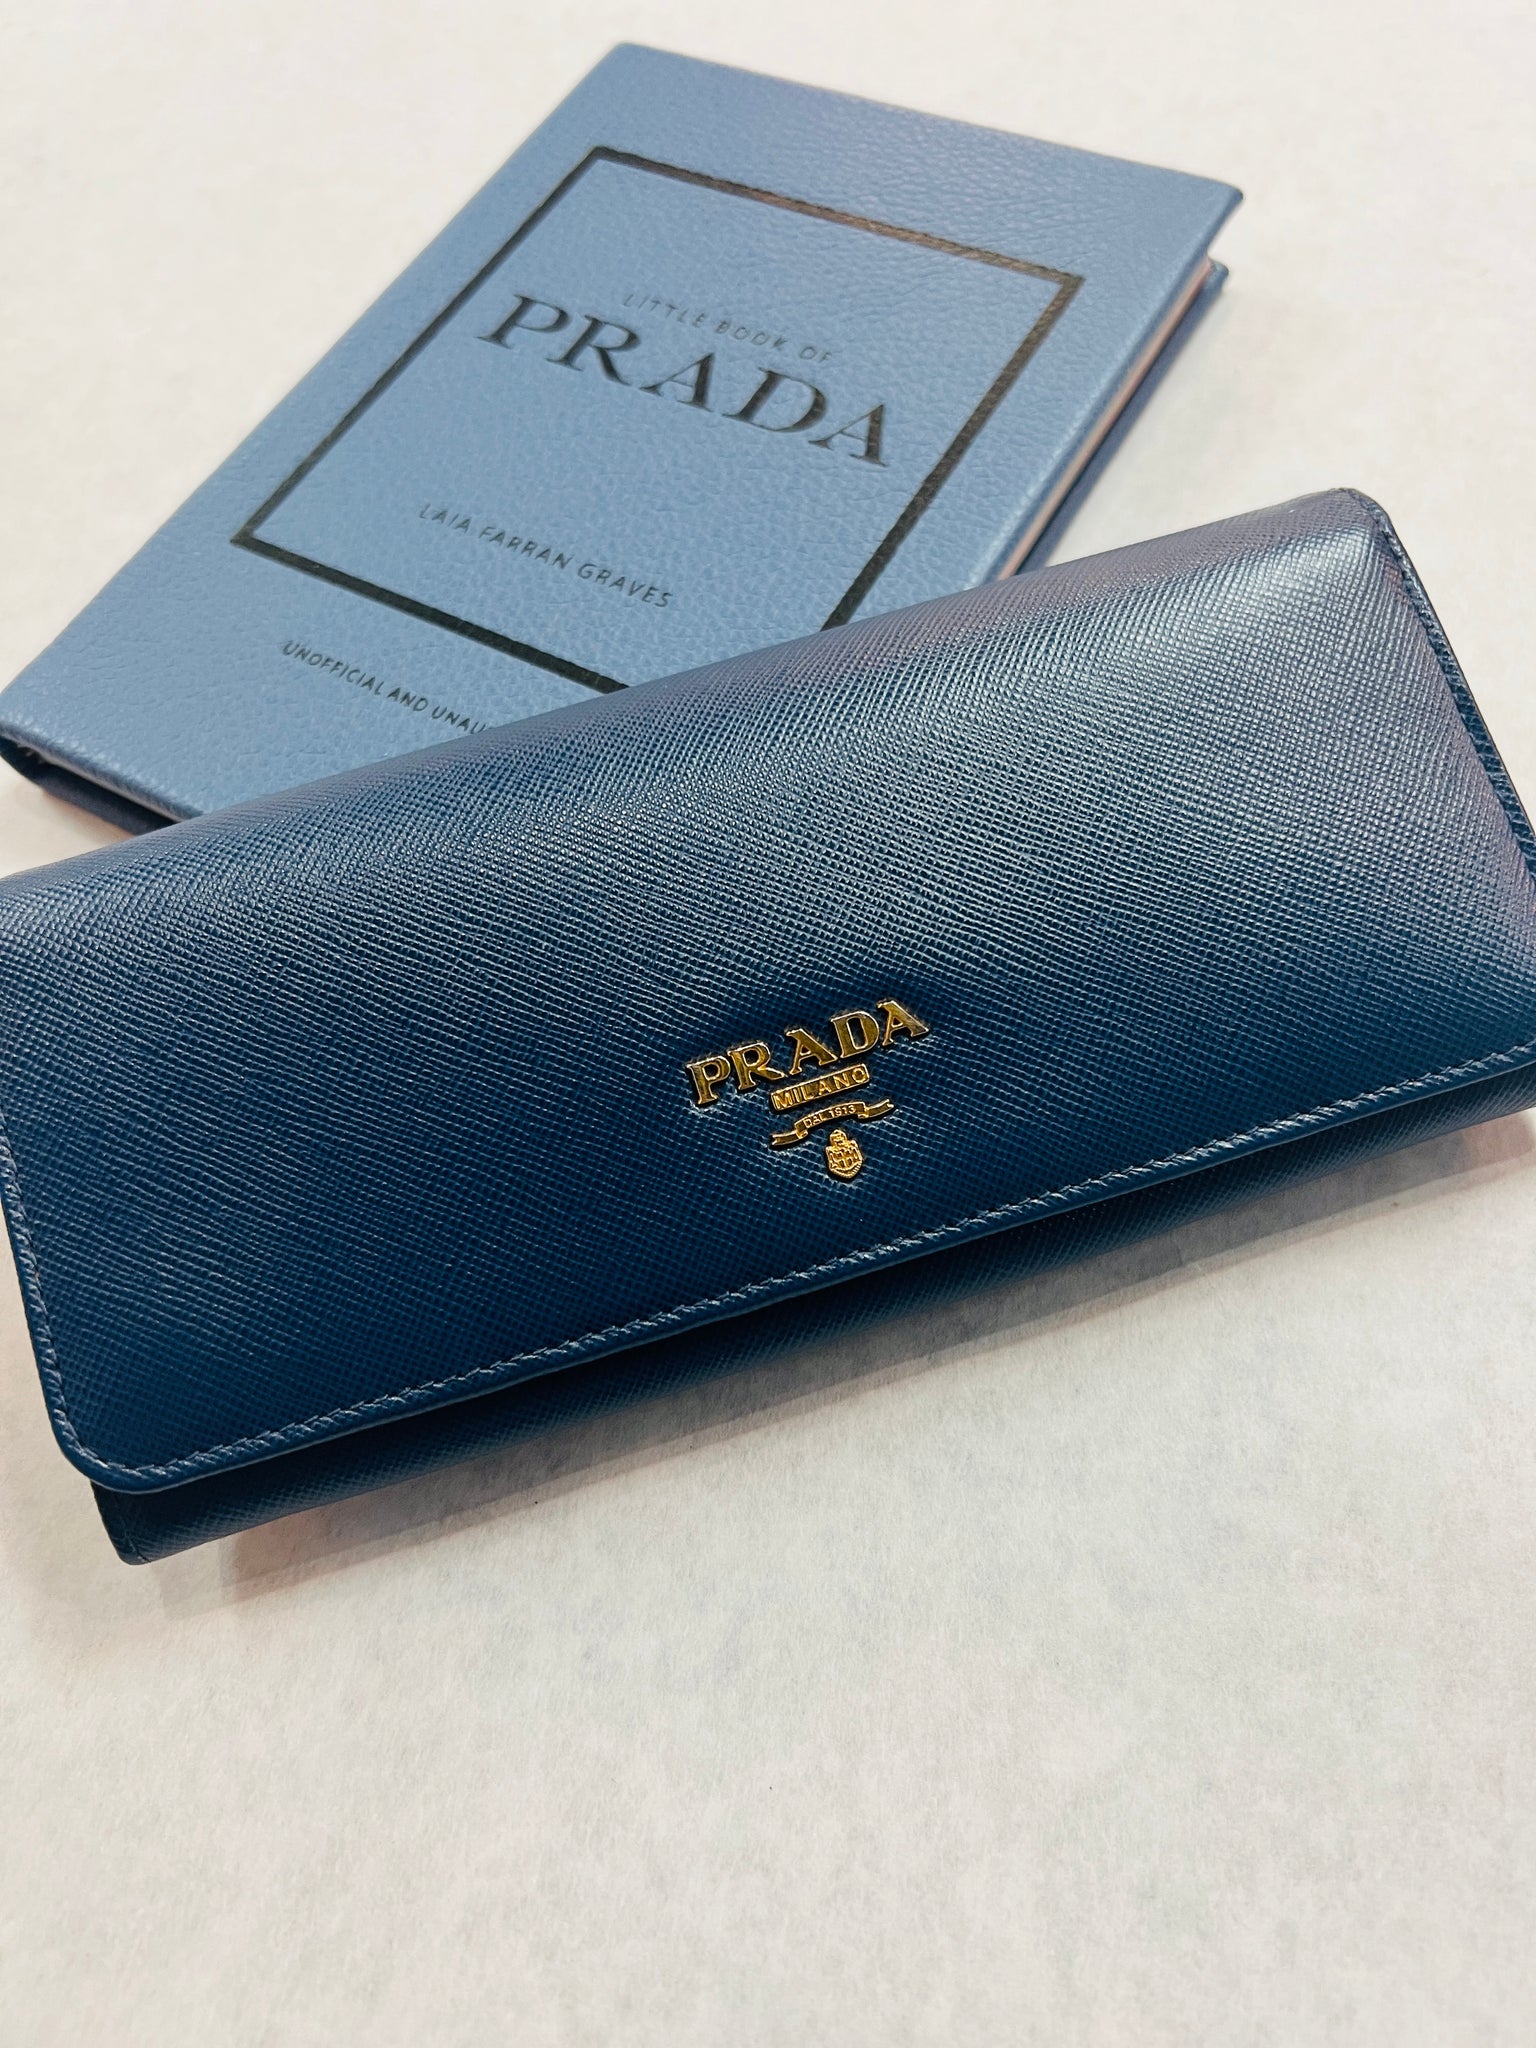 Prada wallet in saffiano leather